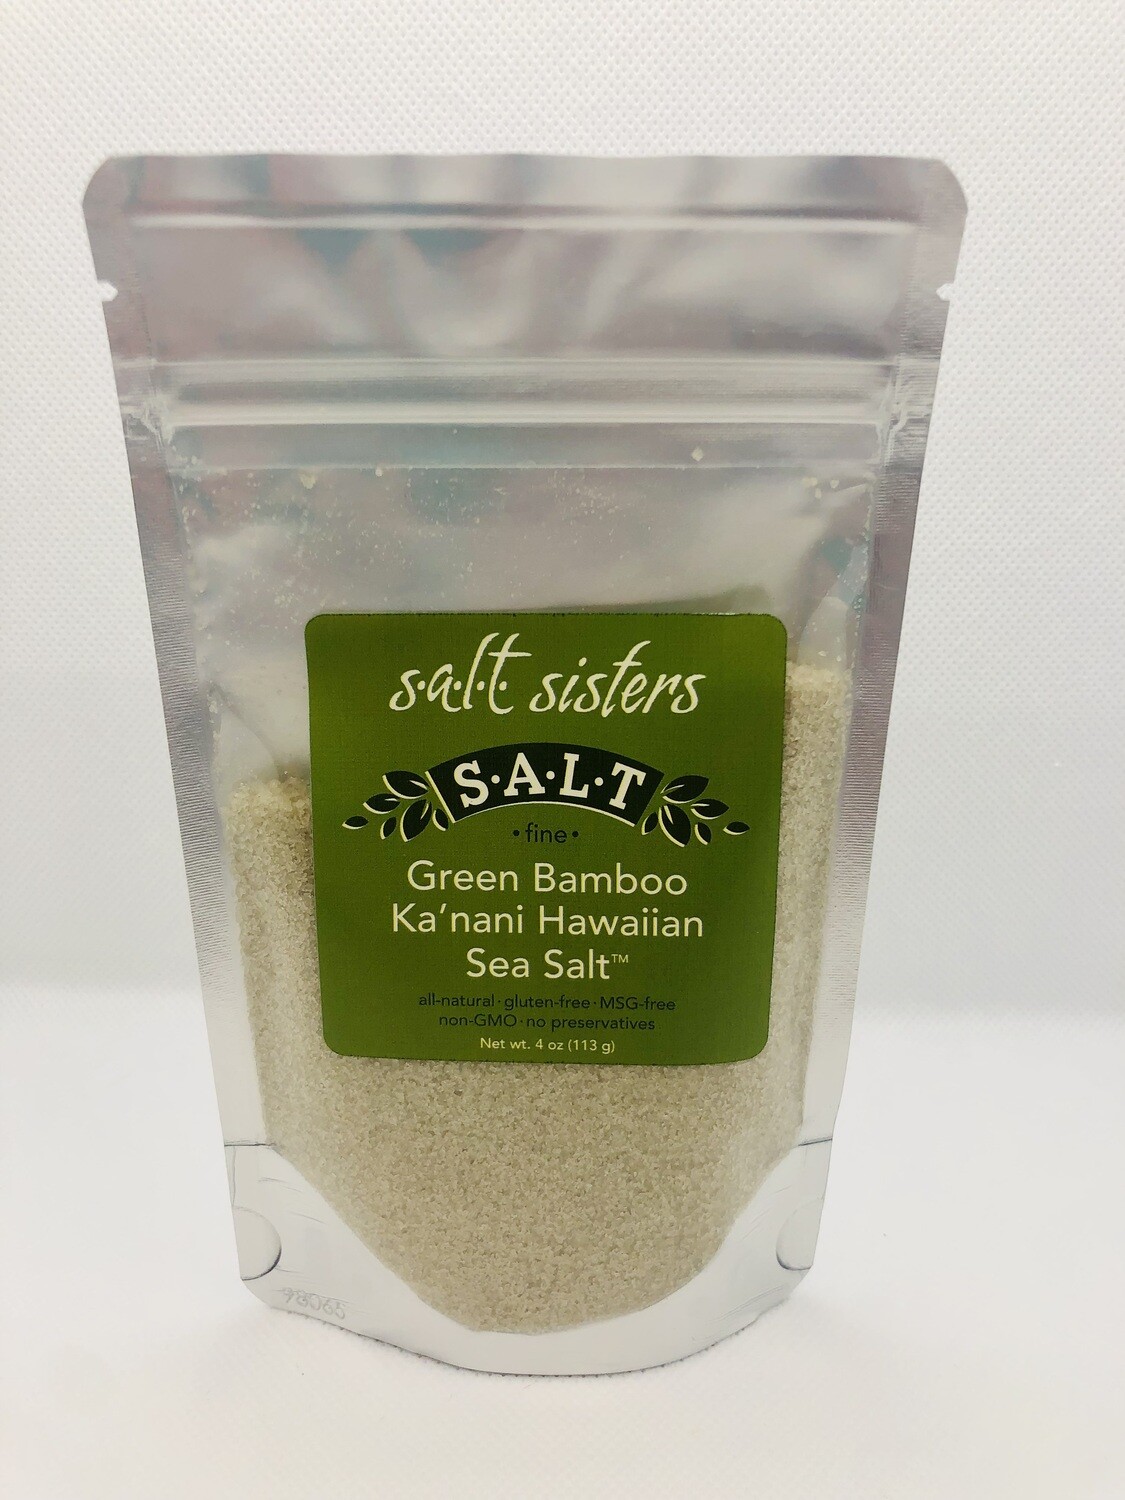 Green Bamboo KA’NANI Hawaiian Sea Salt, coarse